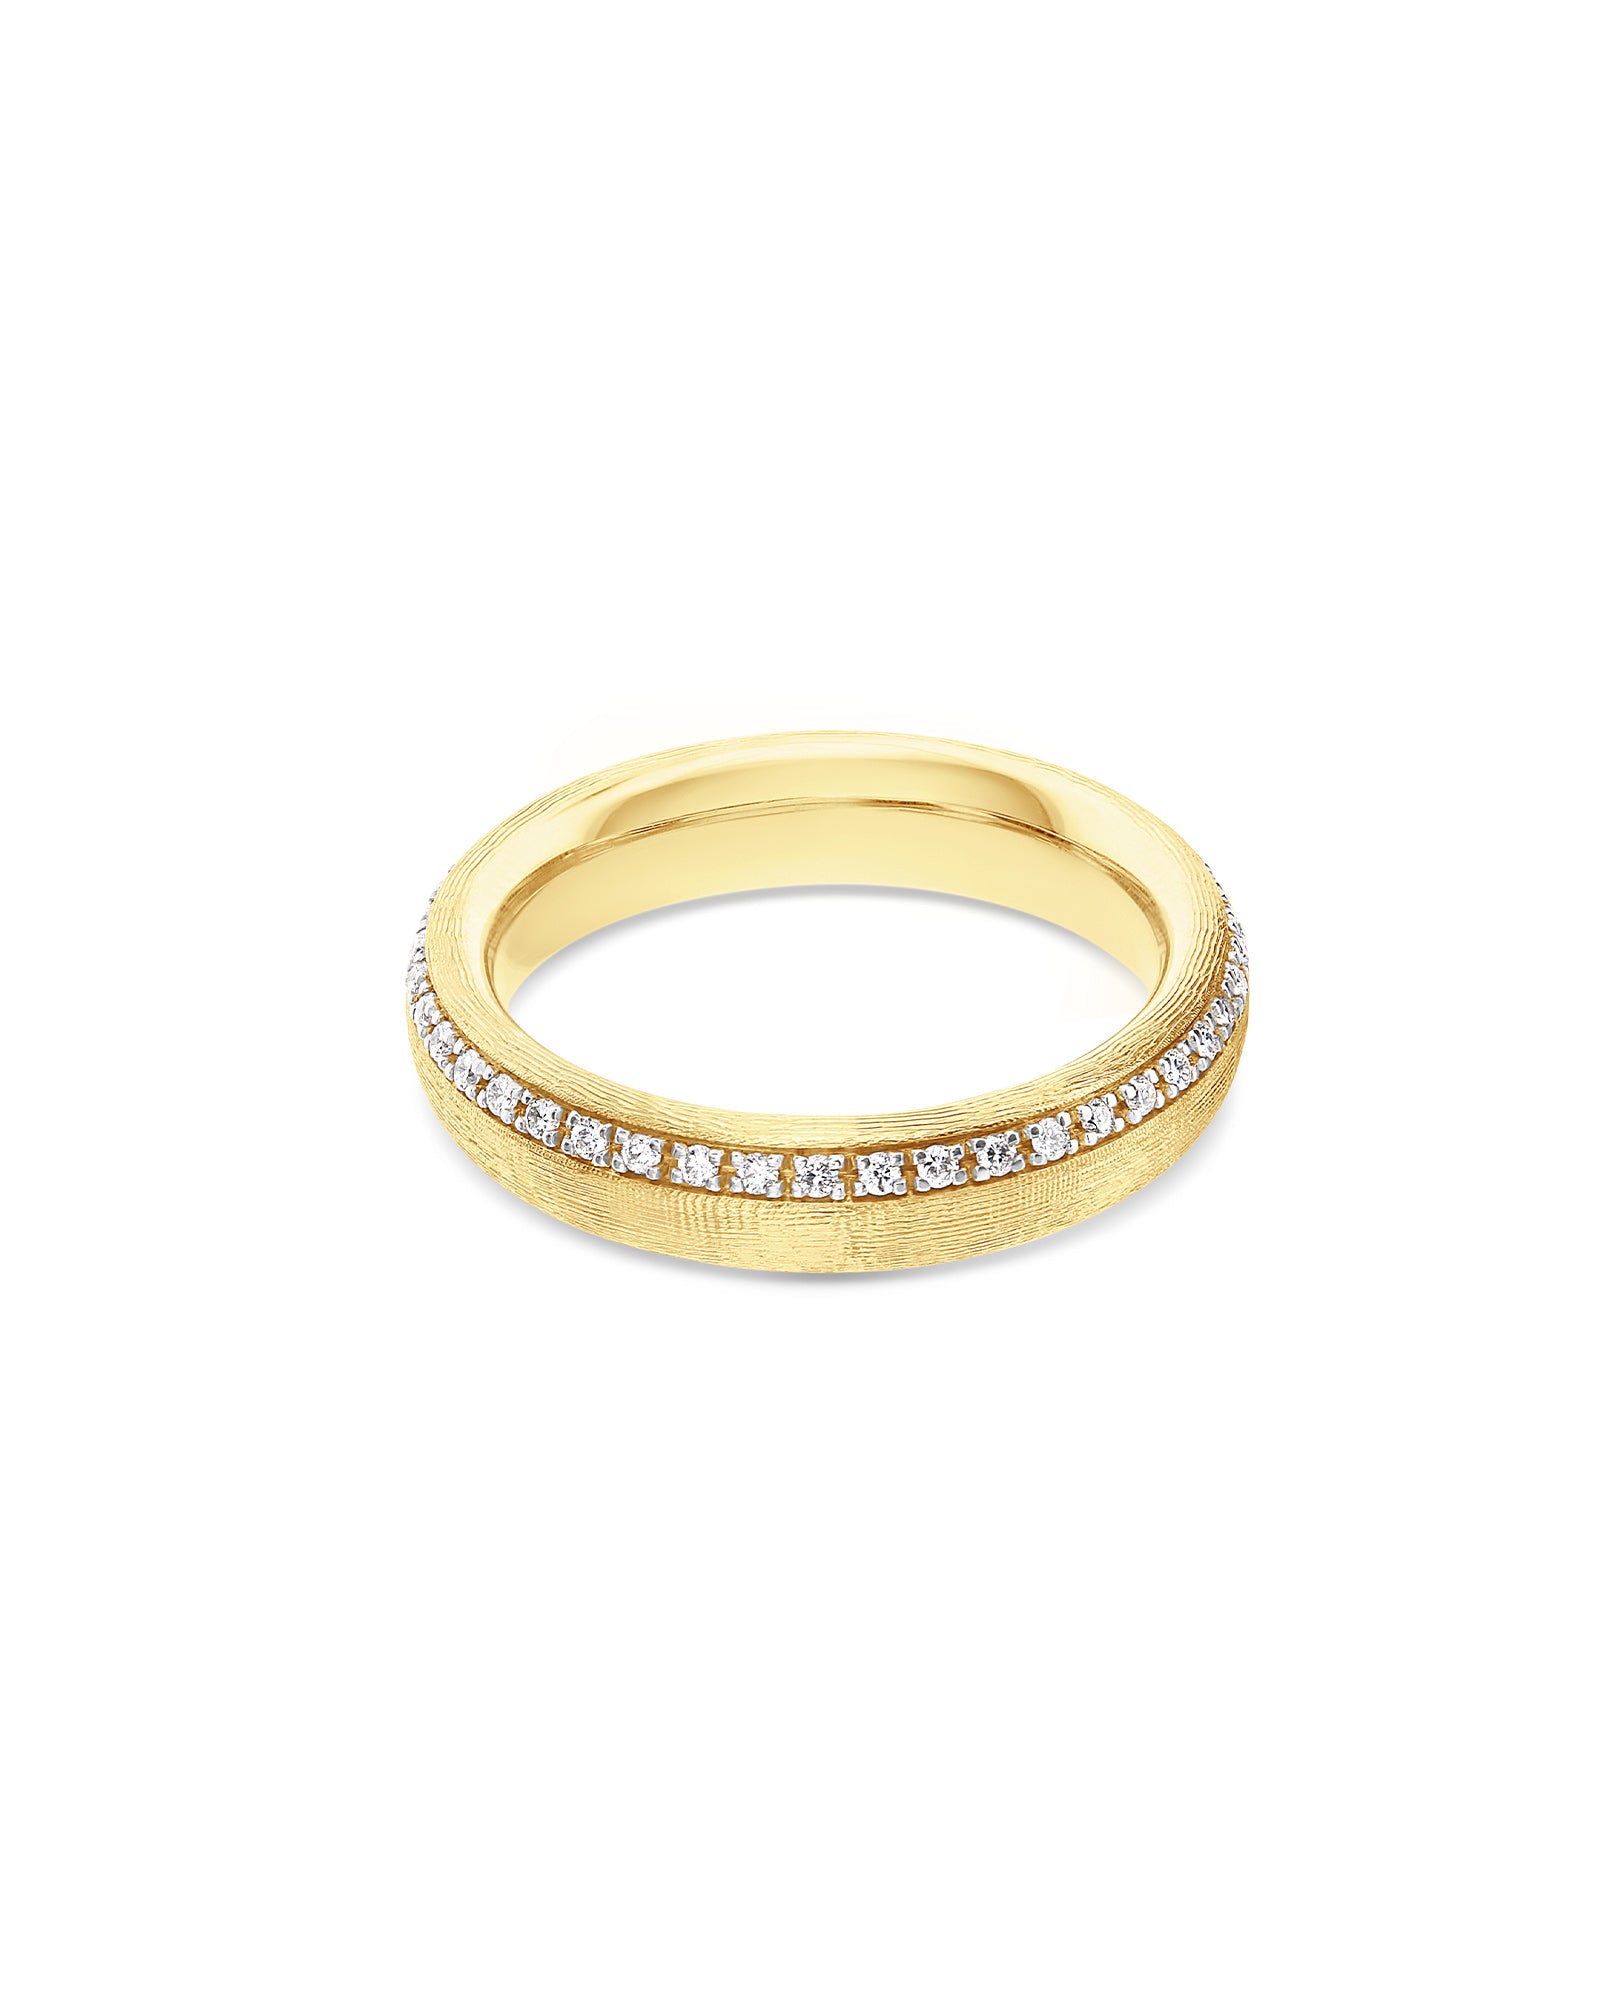 Libera Icon Gold and diamonds tiny Engagement ring